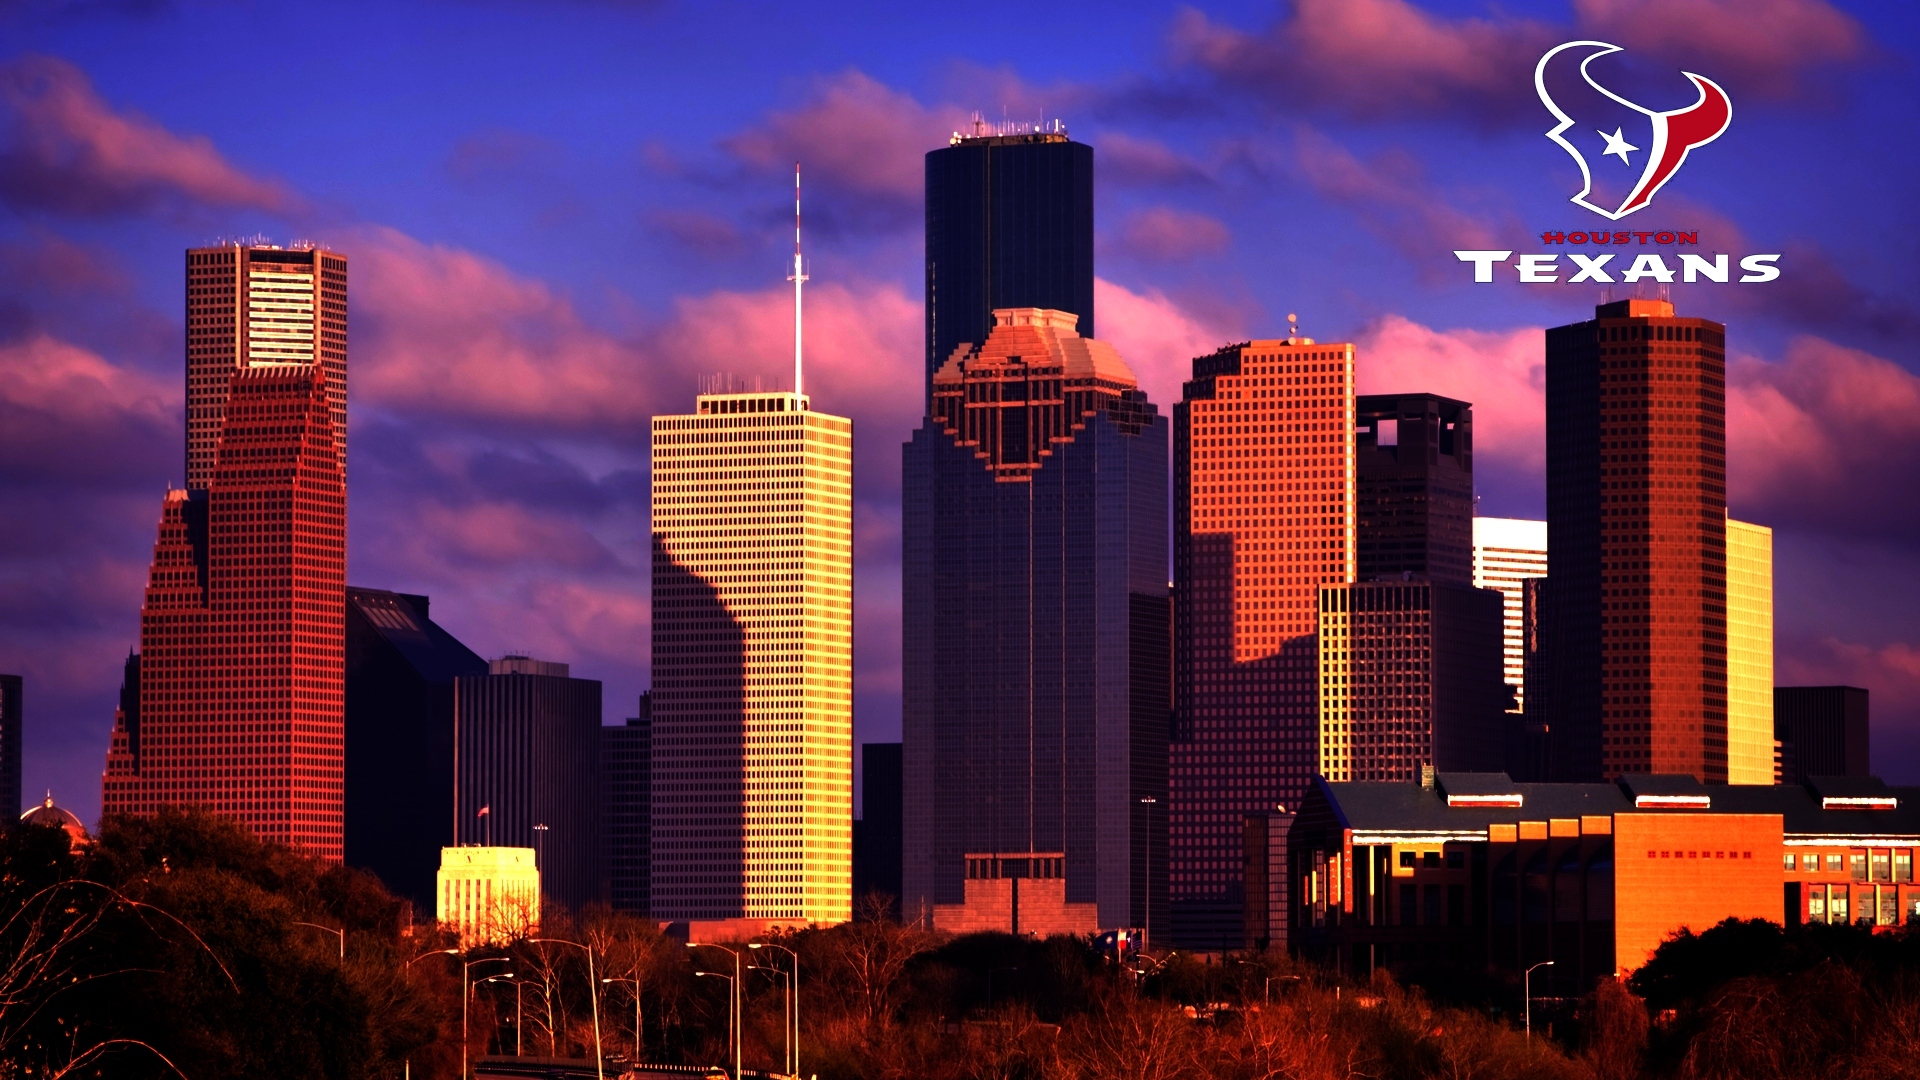 HD Wallpaper Houston Texans Logo X Kb Jpeg